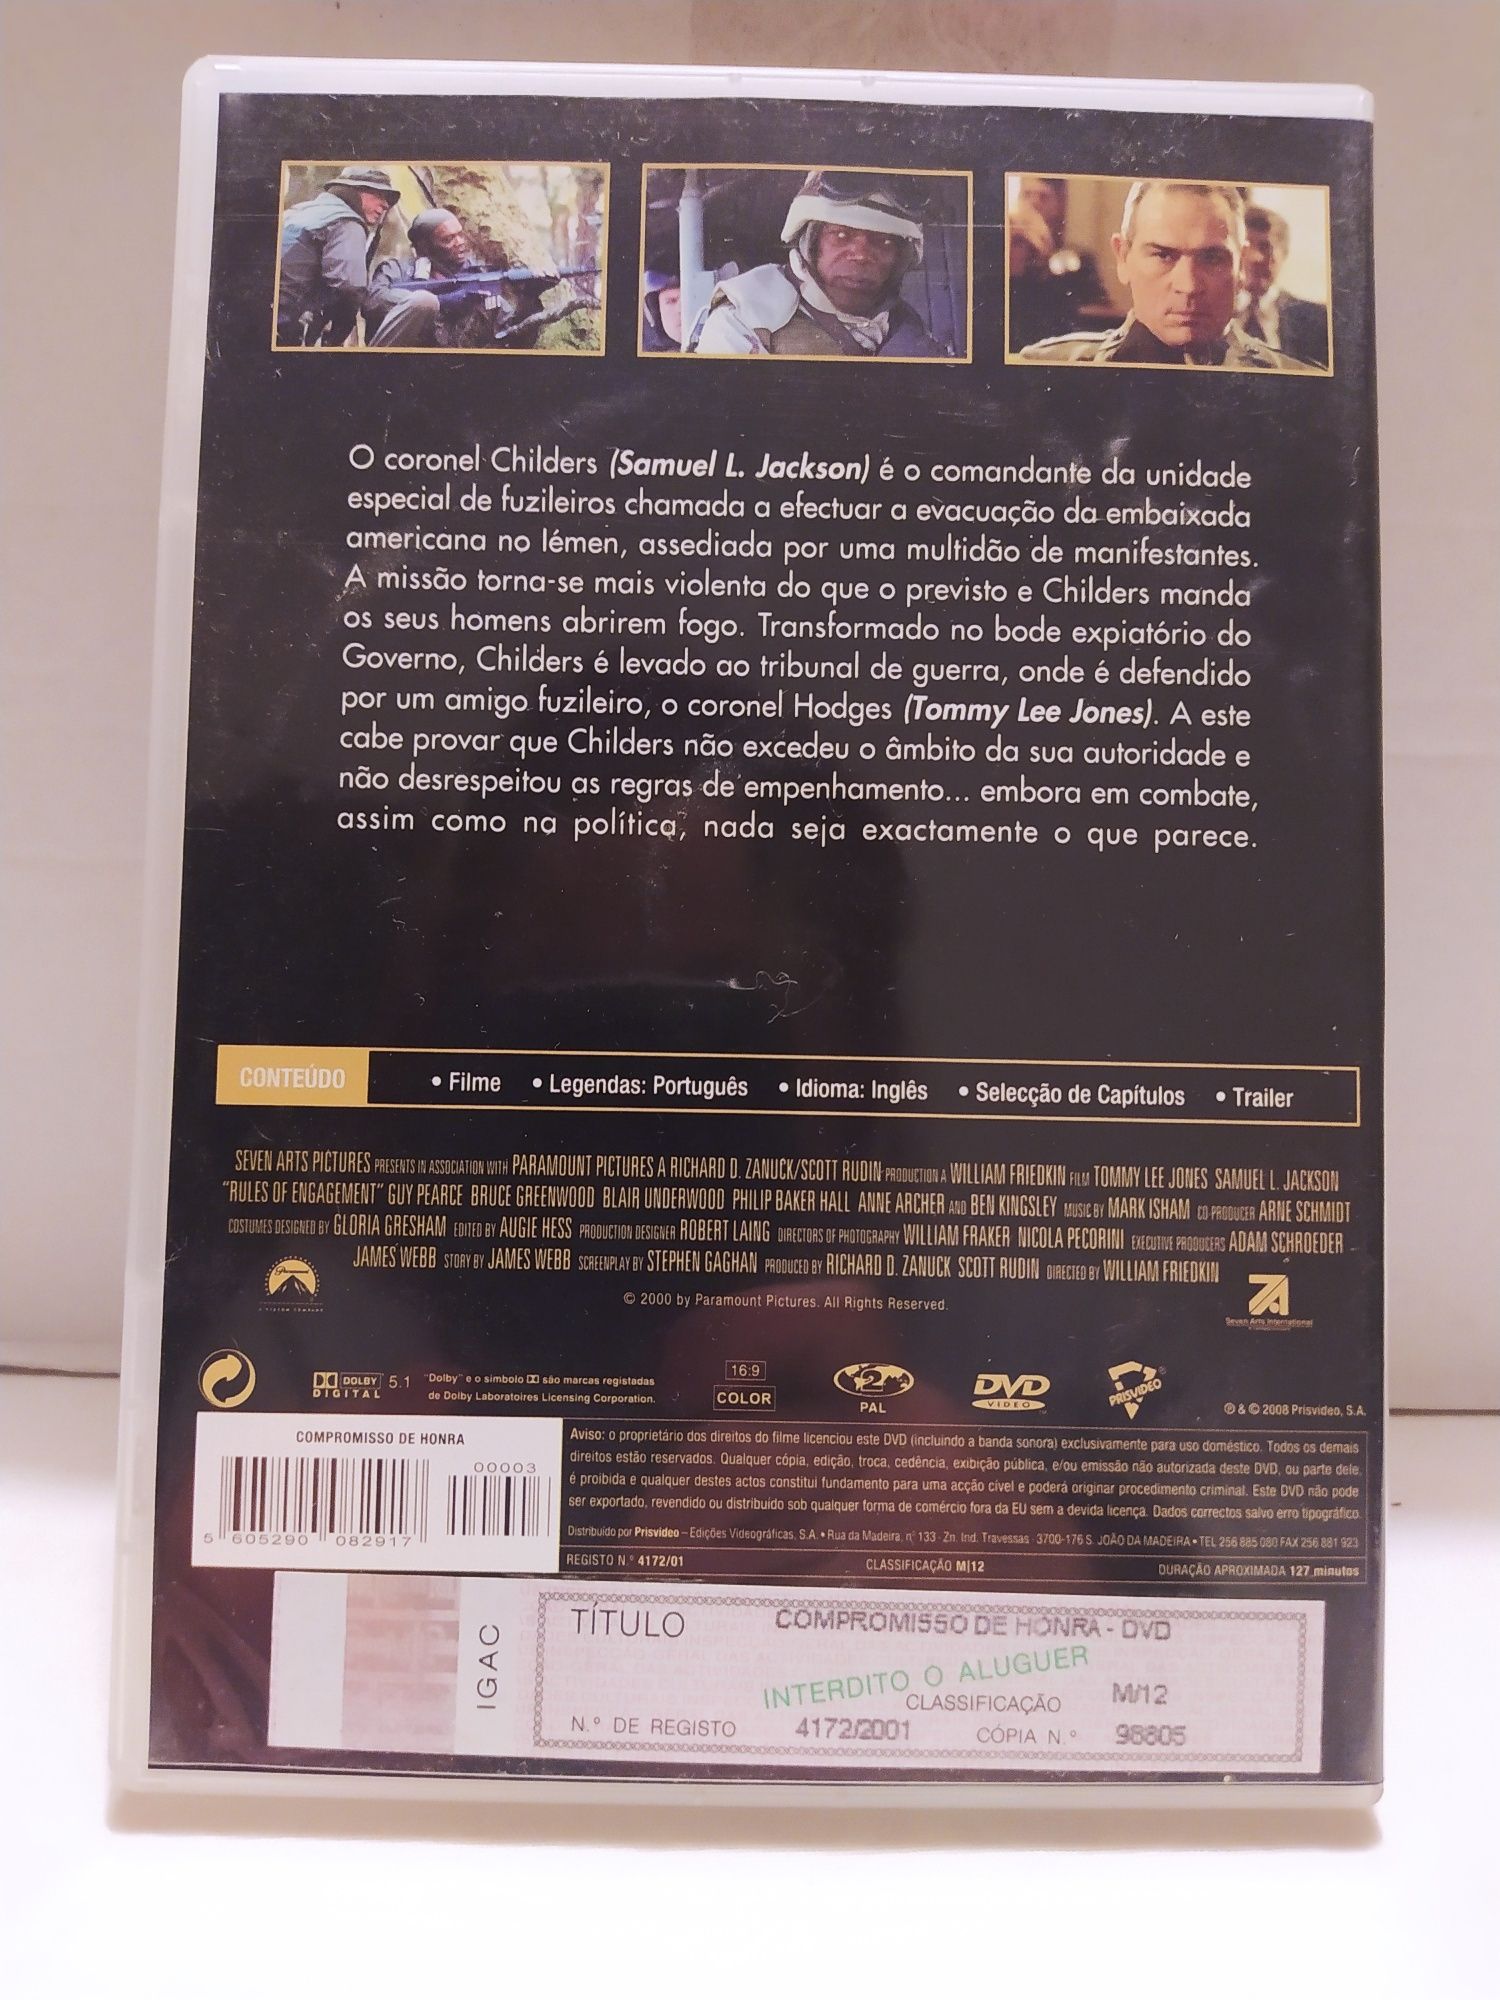 DVD. Compromisso de Honra. Trailer